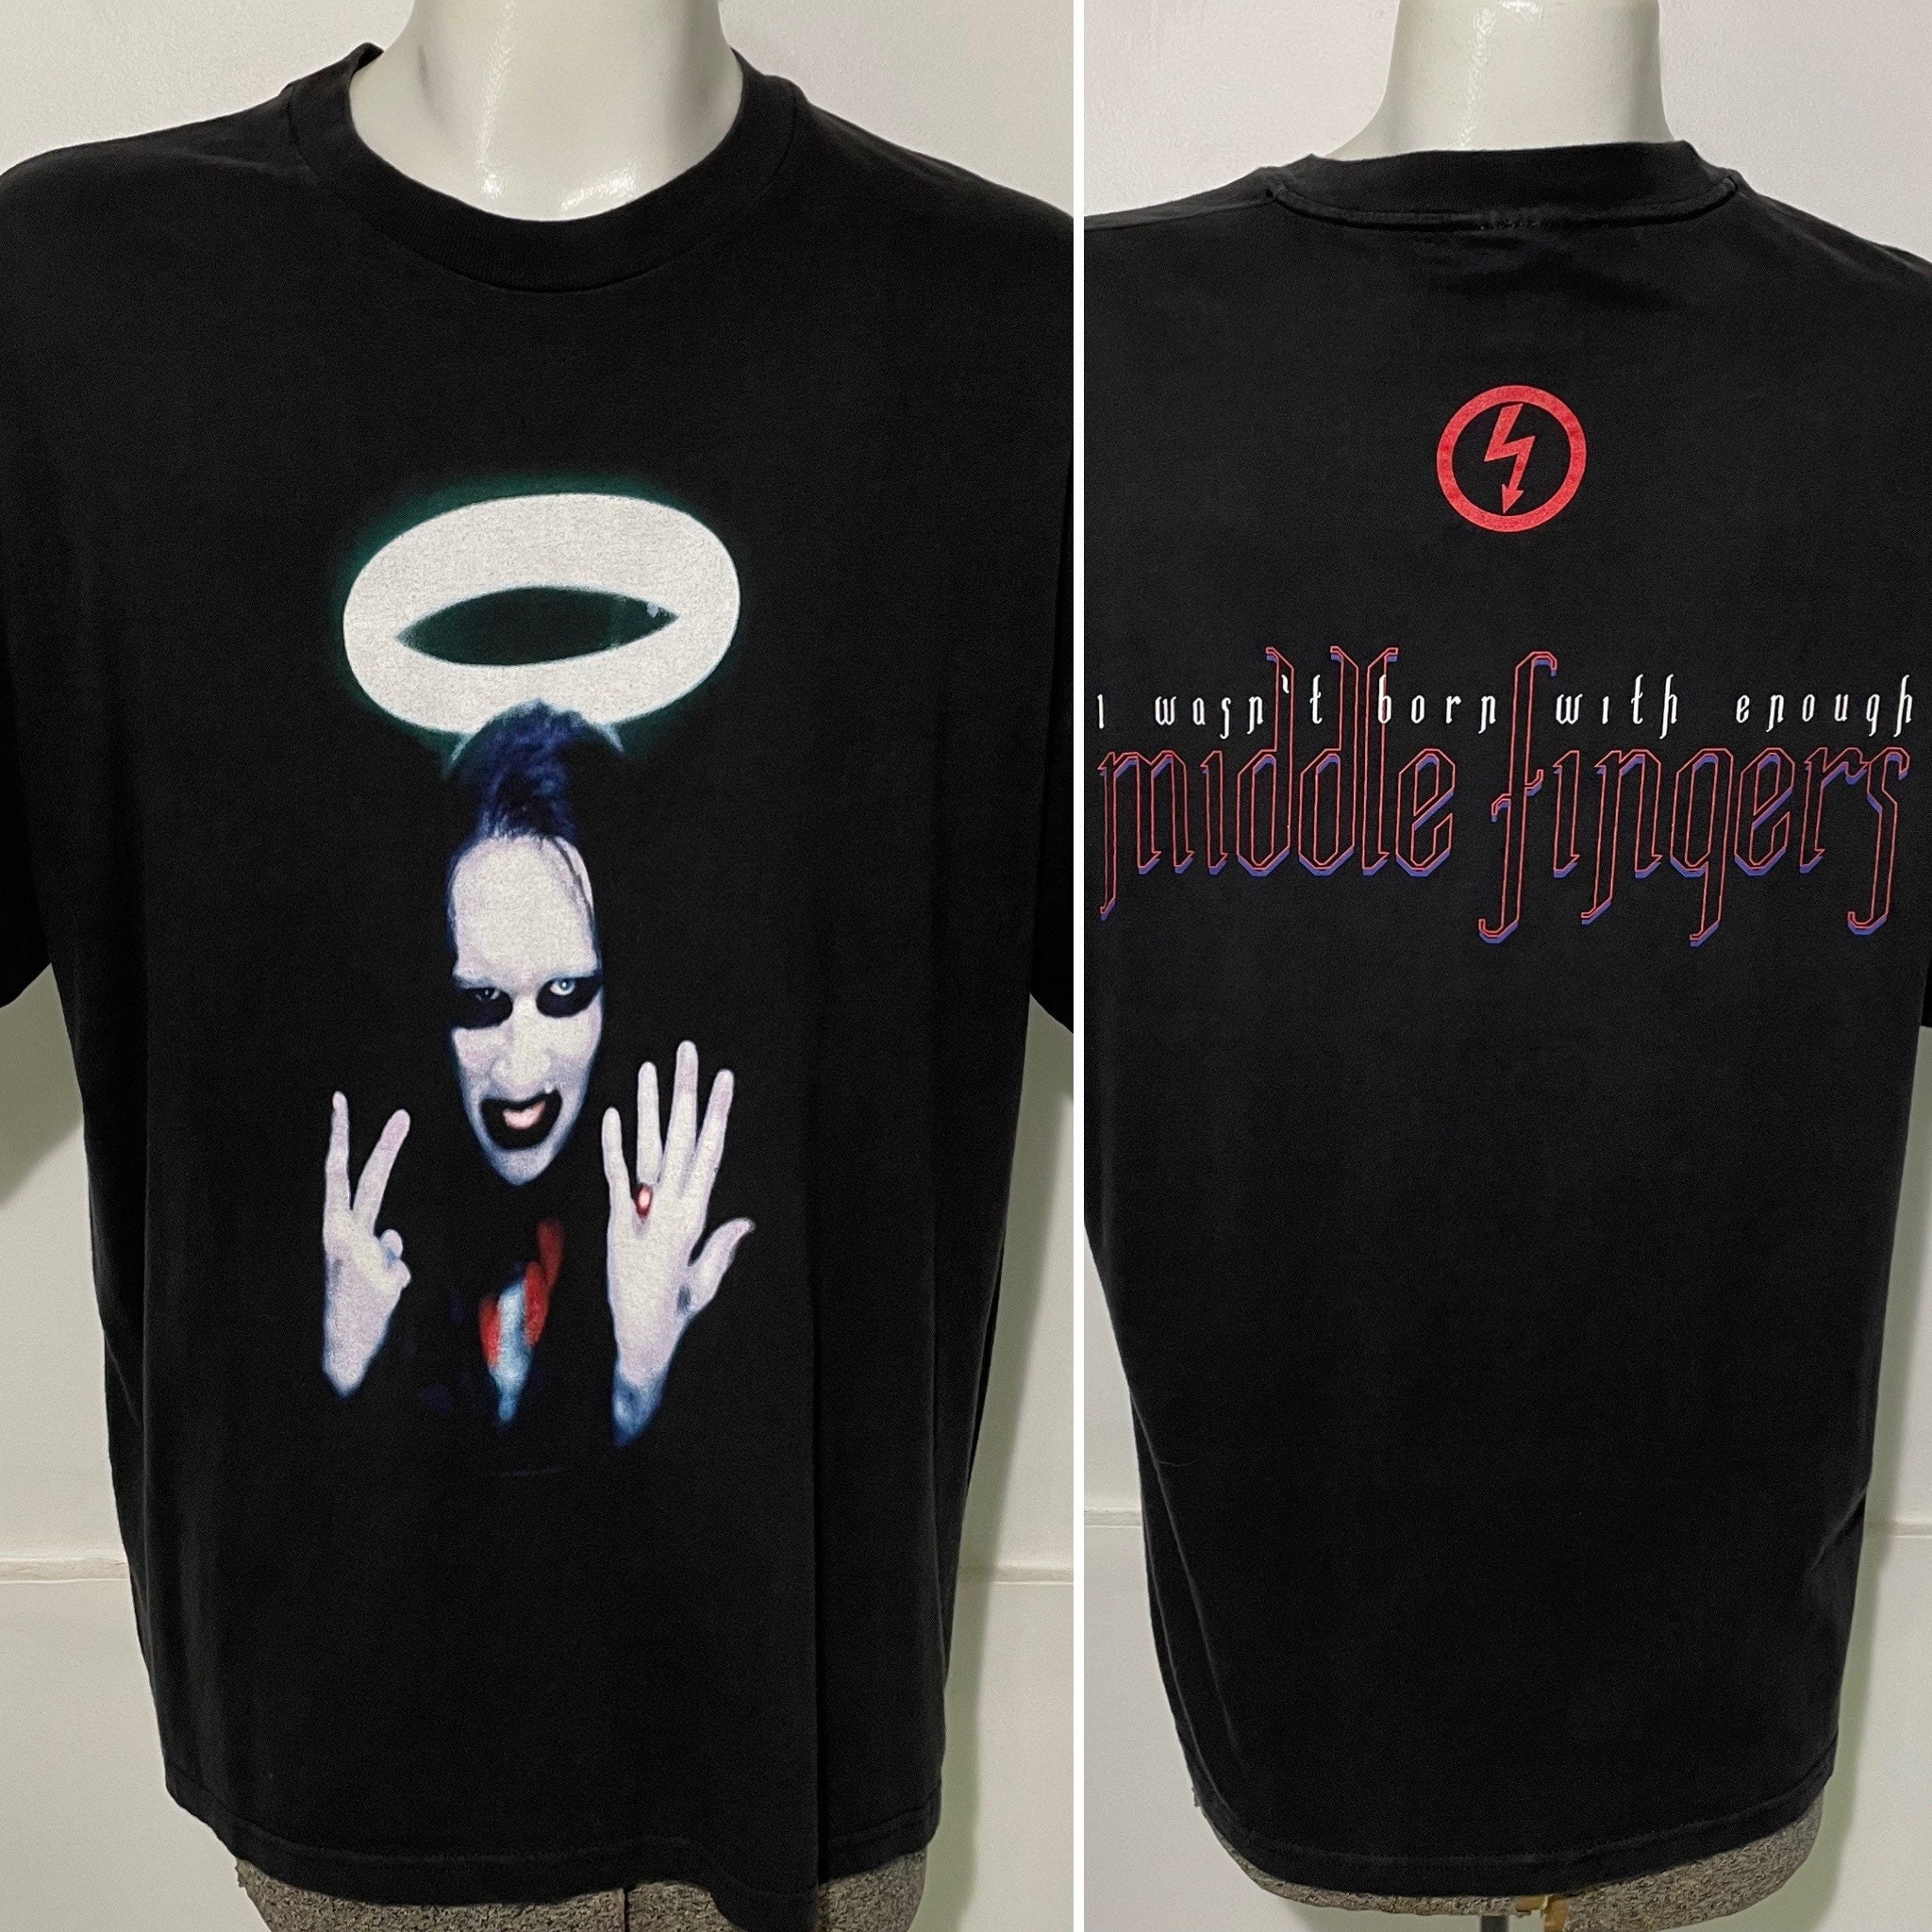 Marilyn Manson マルチプリントTシャツ◎着丈87